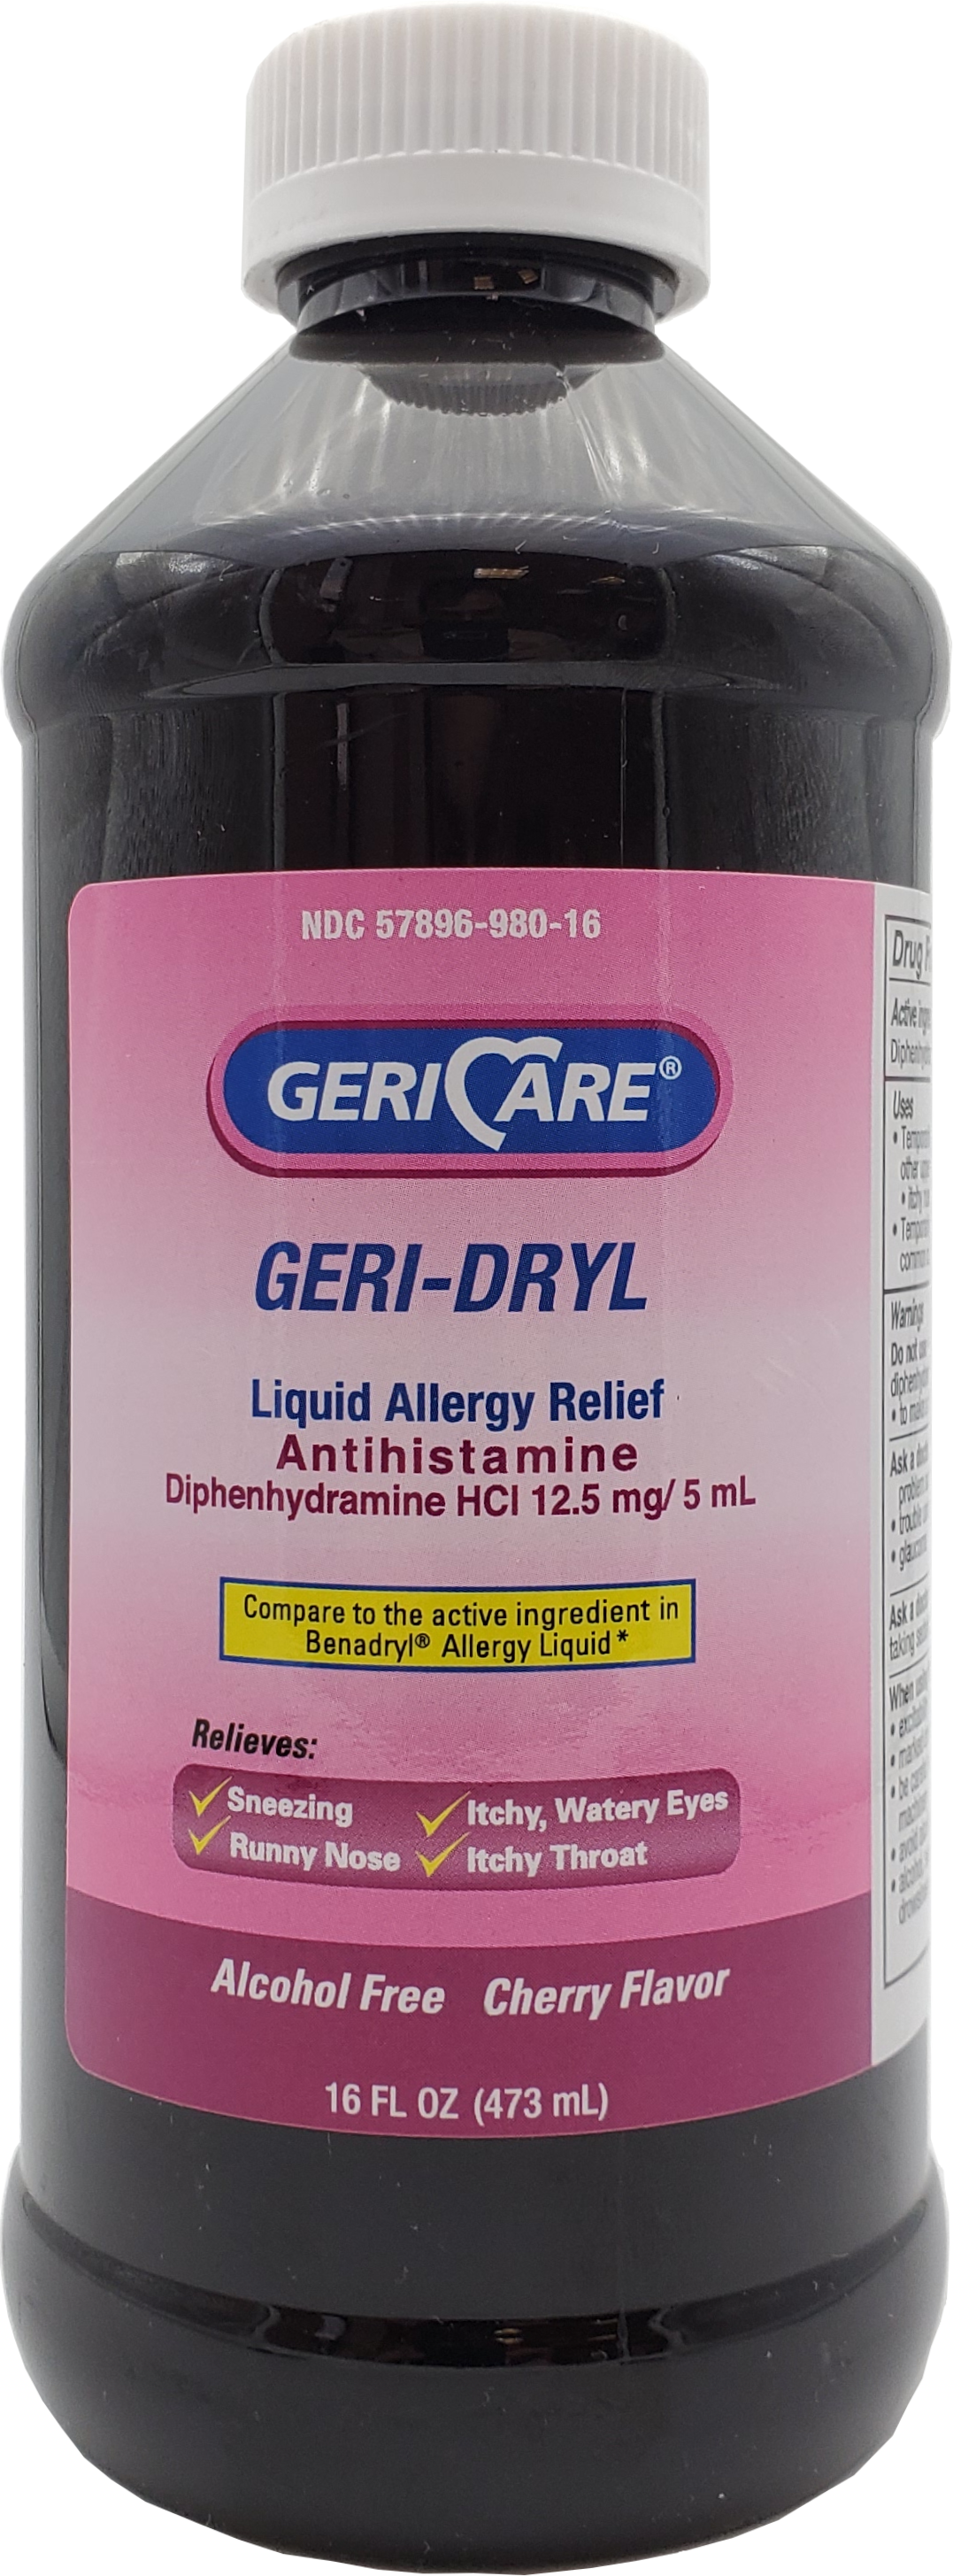 Geri-Dryl Liquid